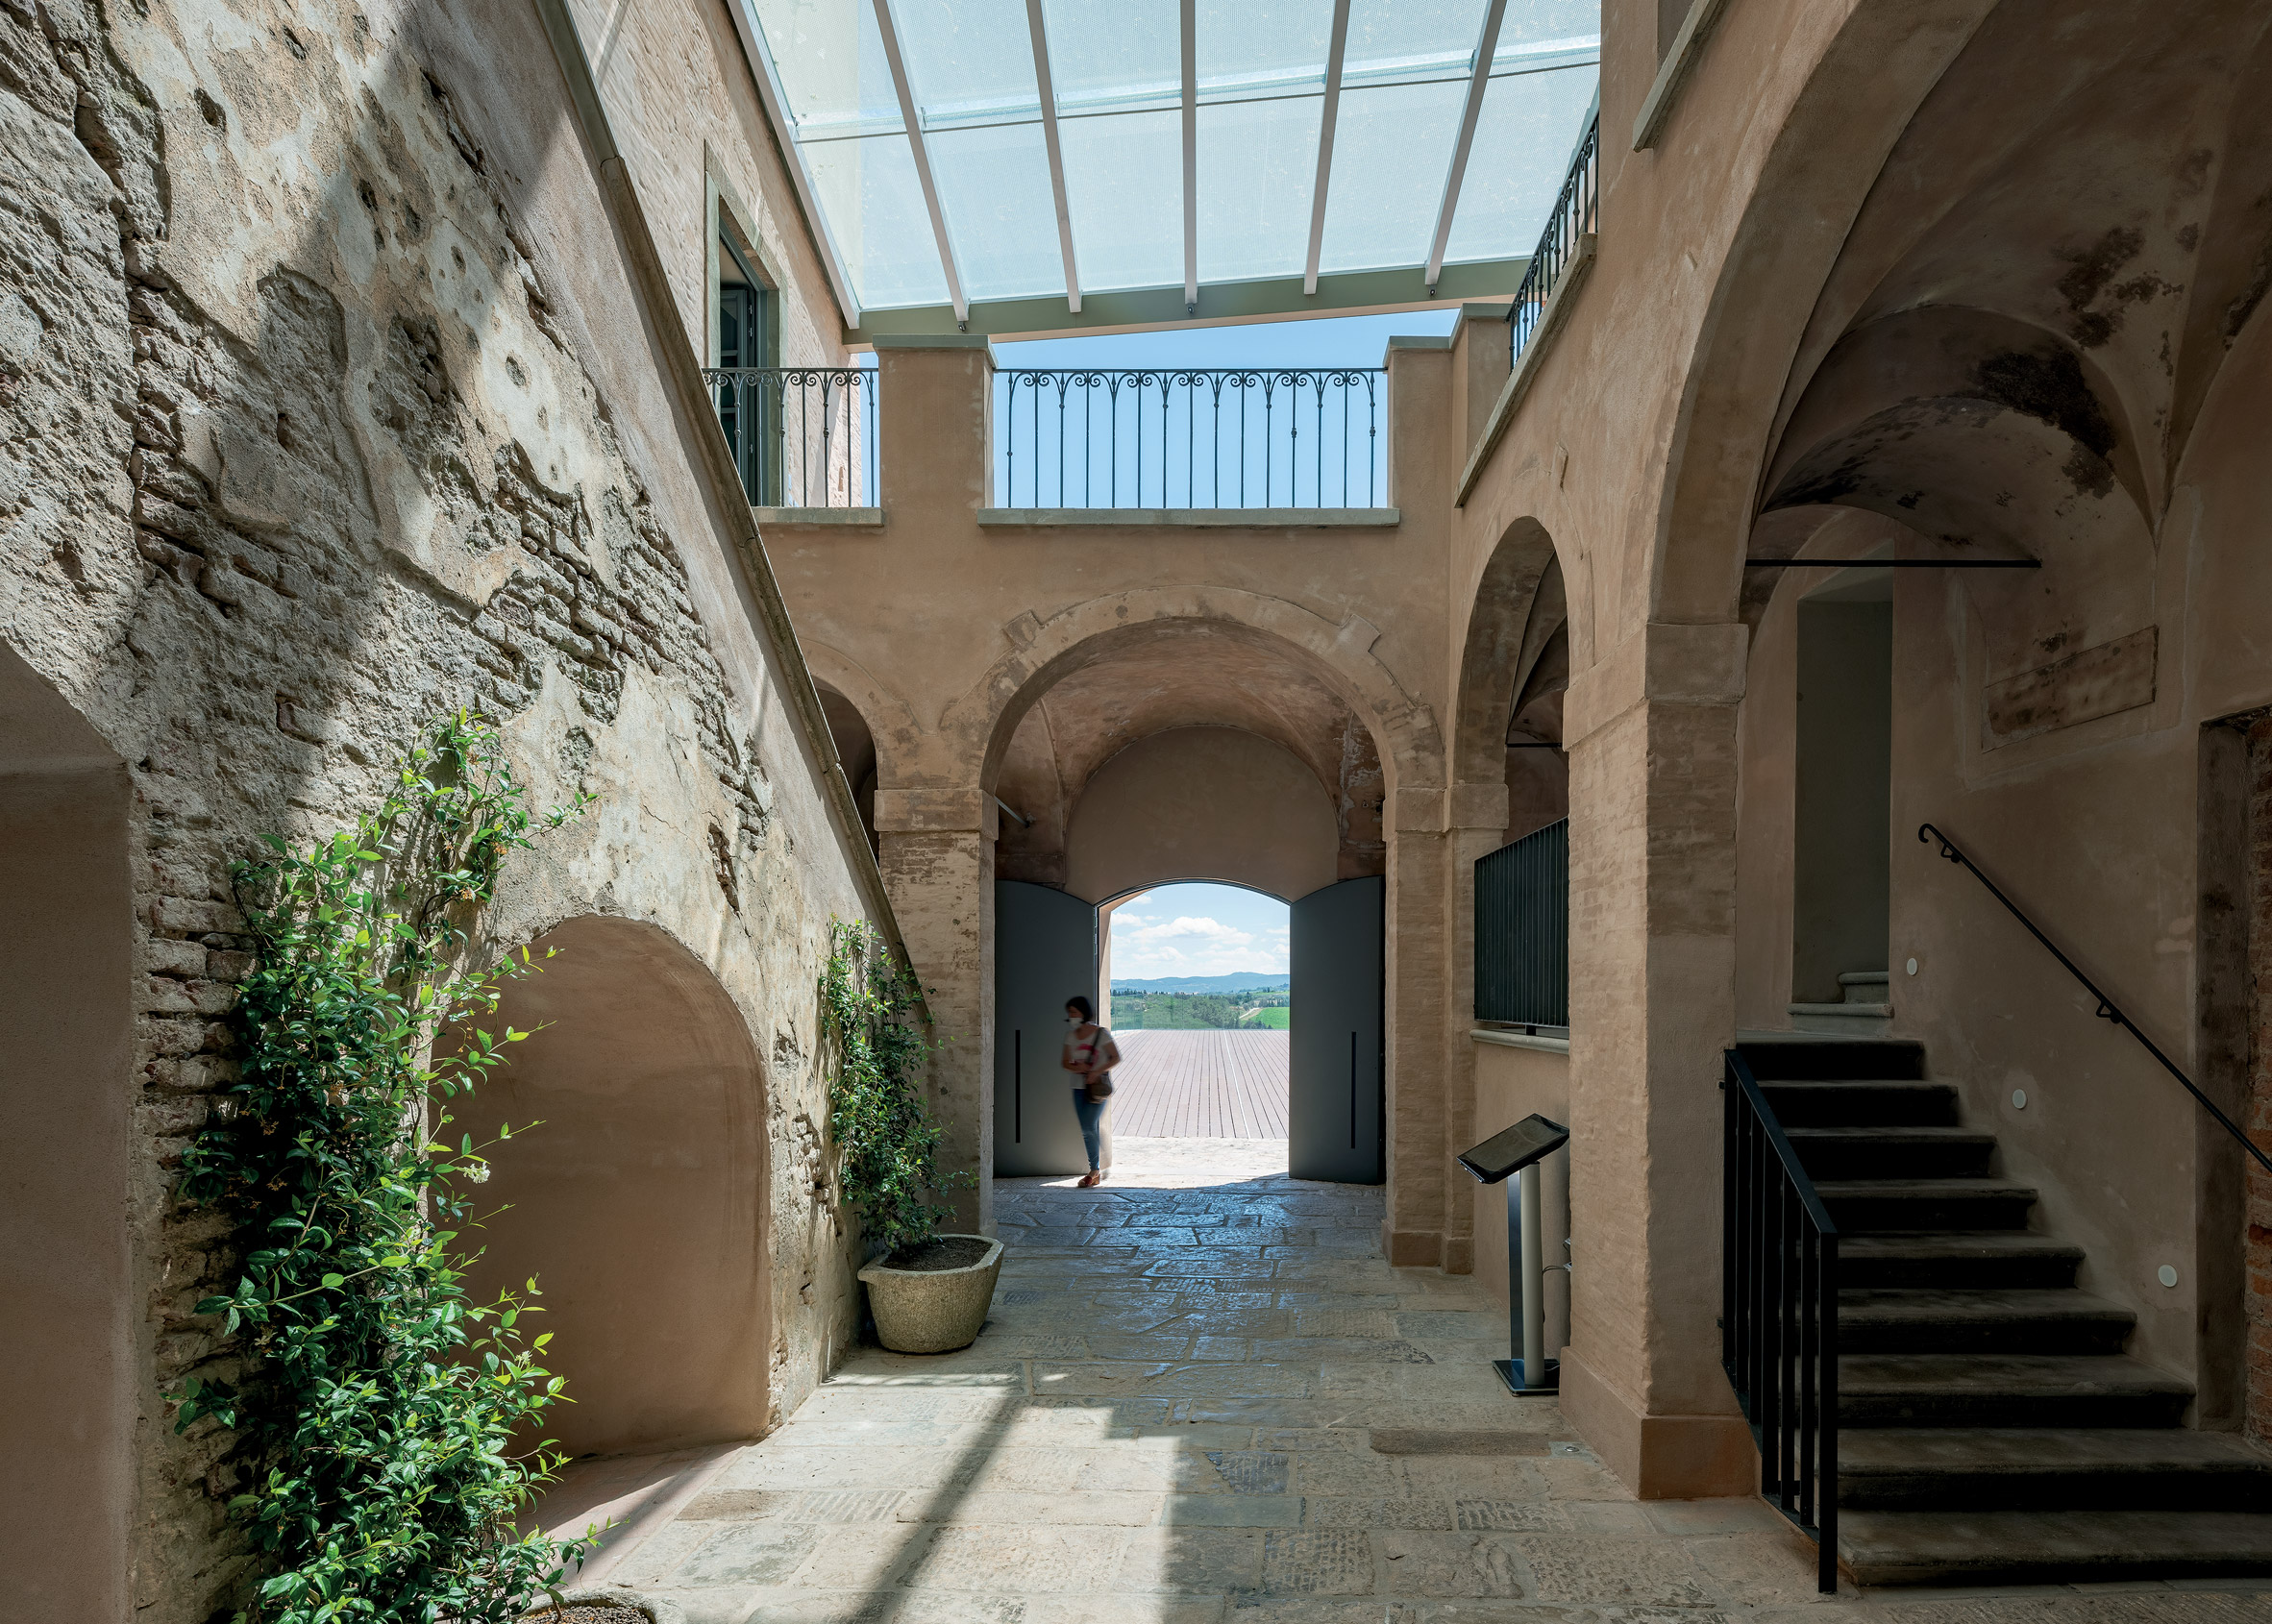 Interior image of the entrance courtyard at Palazzo Senza Tempo